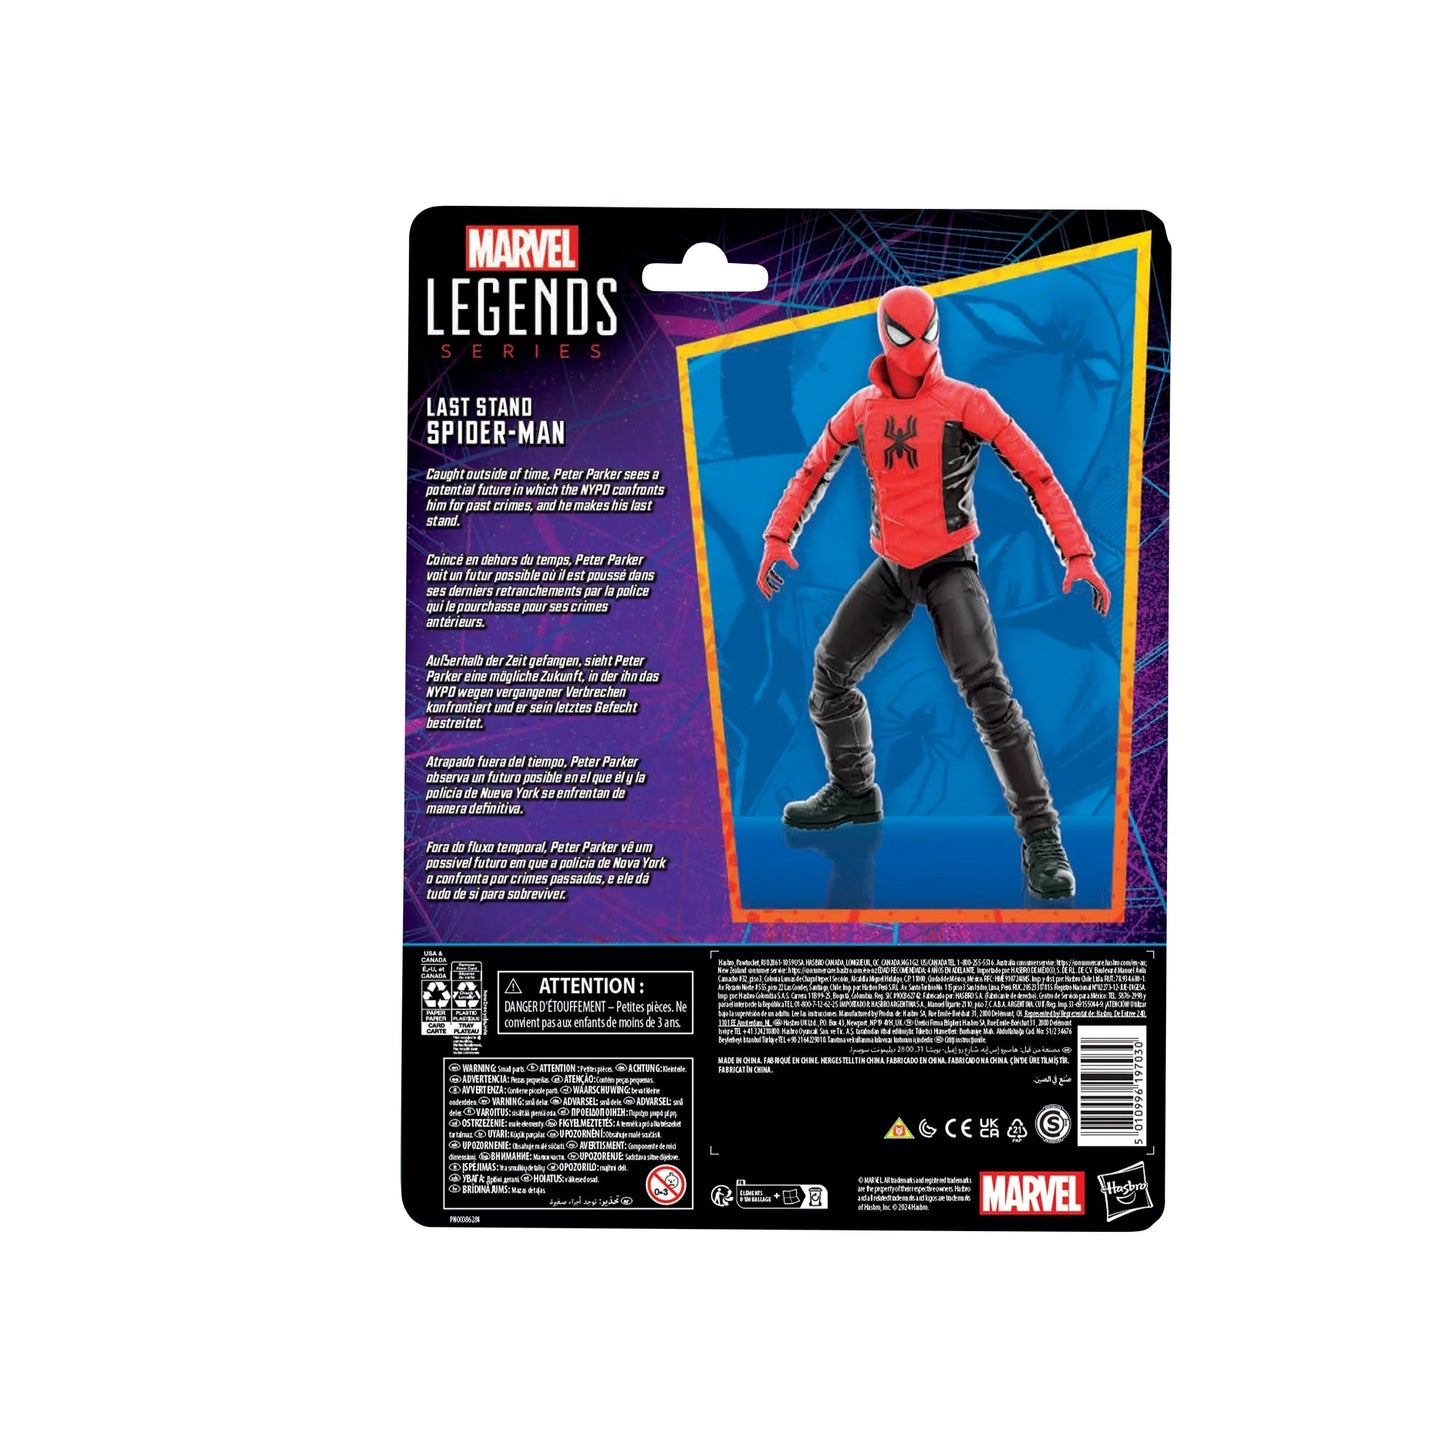 Last Stand Spider-Man - Marvel Legends Series